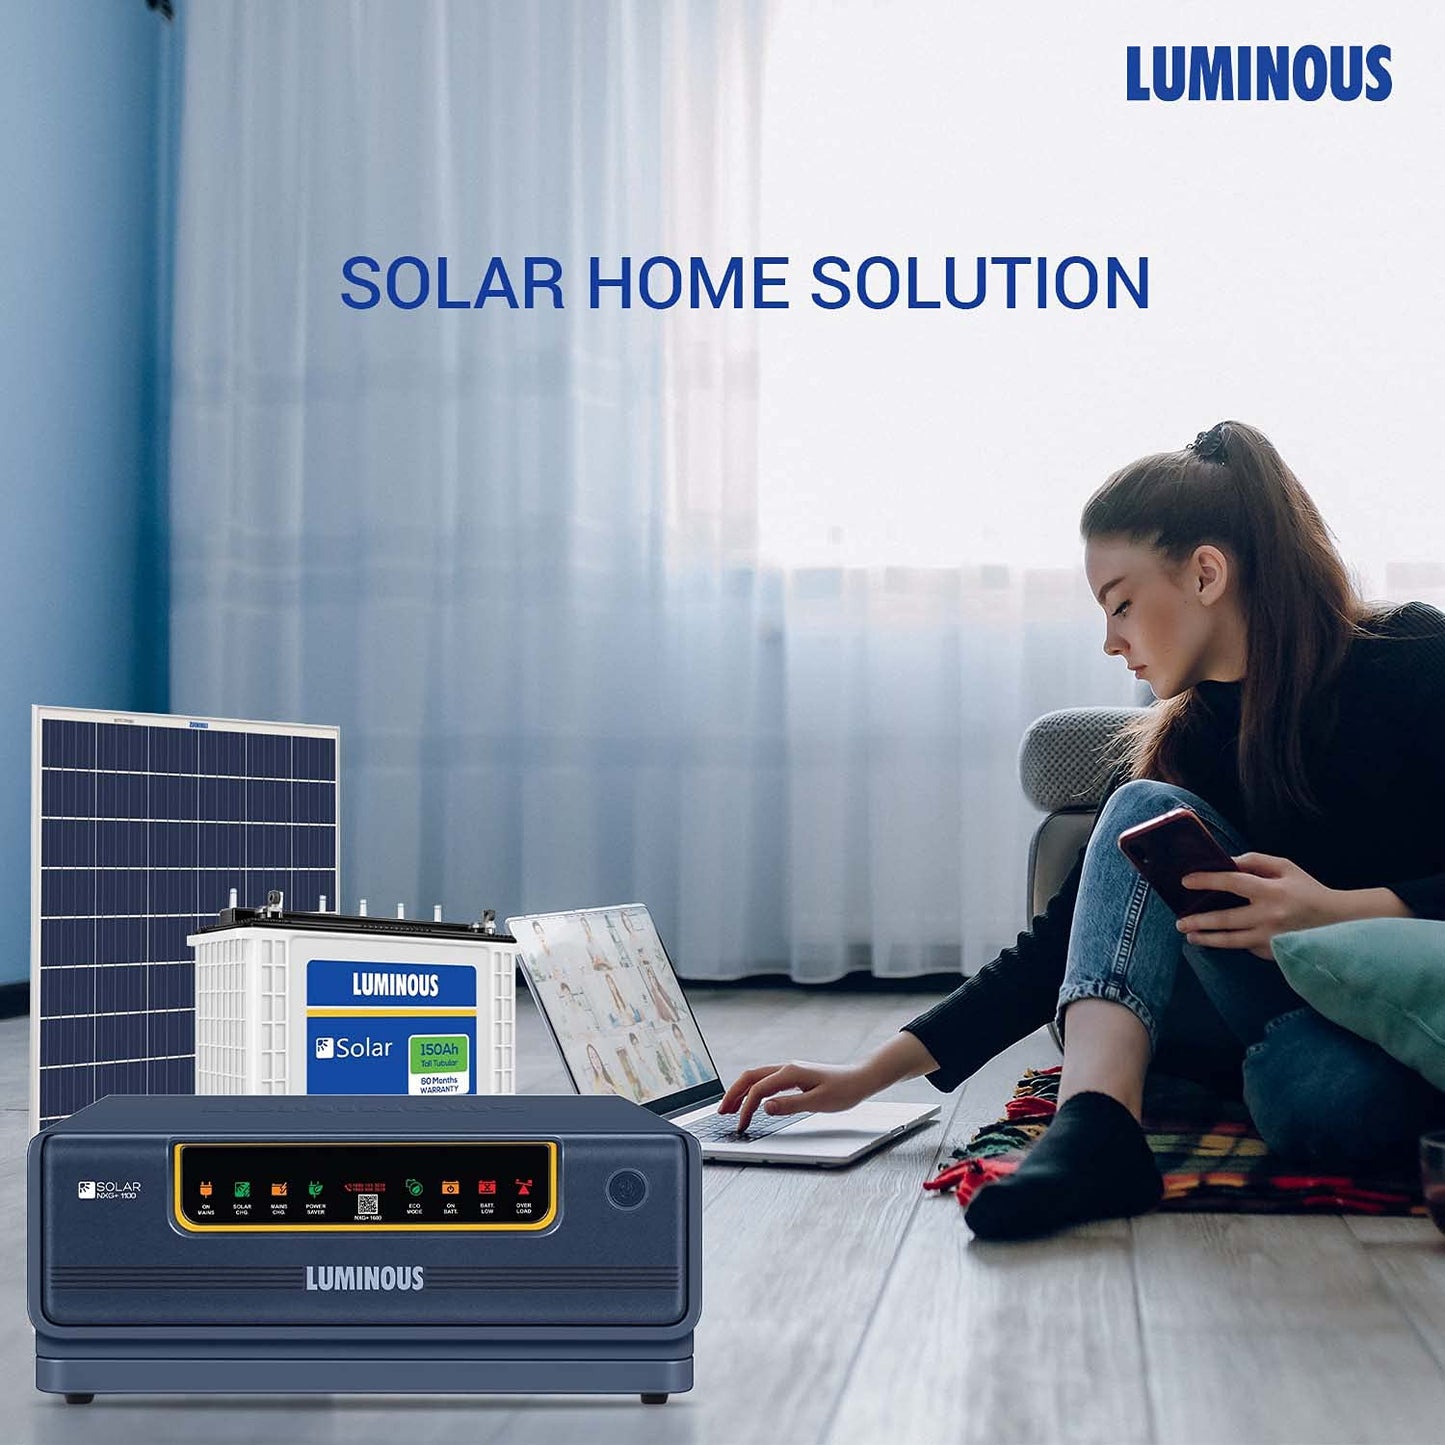 Luminous 1x NXG+ 1100 Hybrid Inverter 1 x LPT12150H 150Ah Solar Battery 1 x 165 Watts Solar Panel